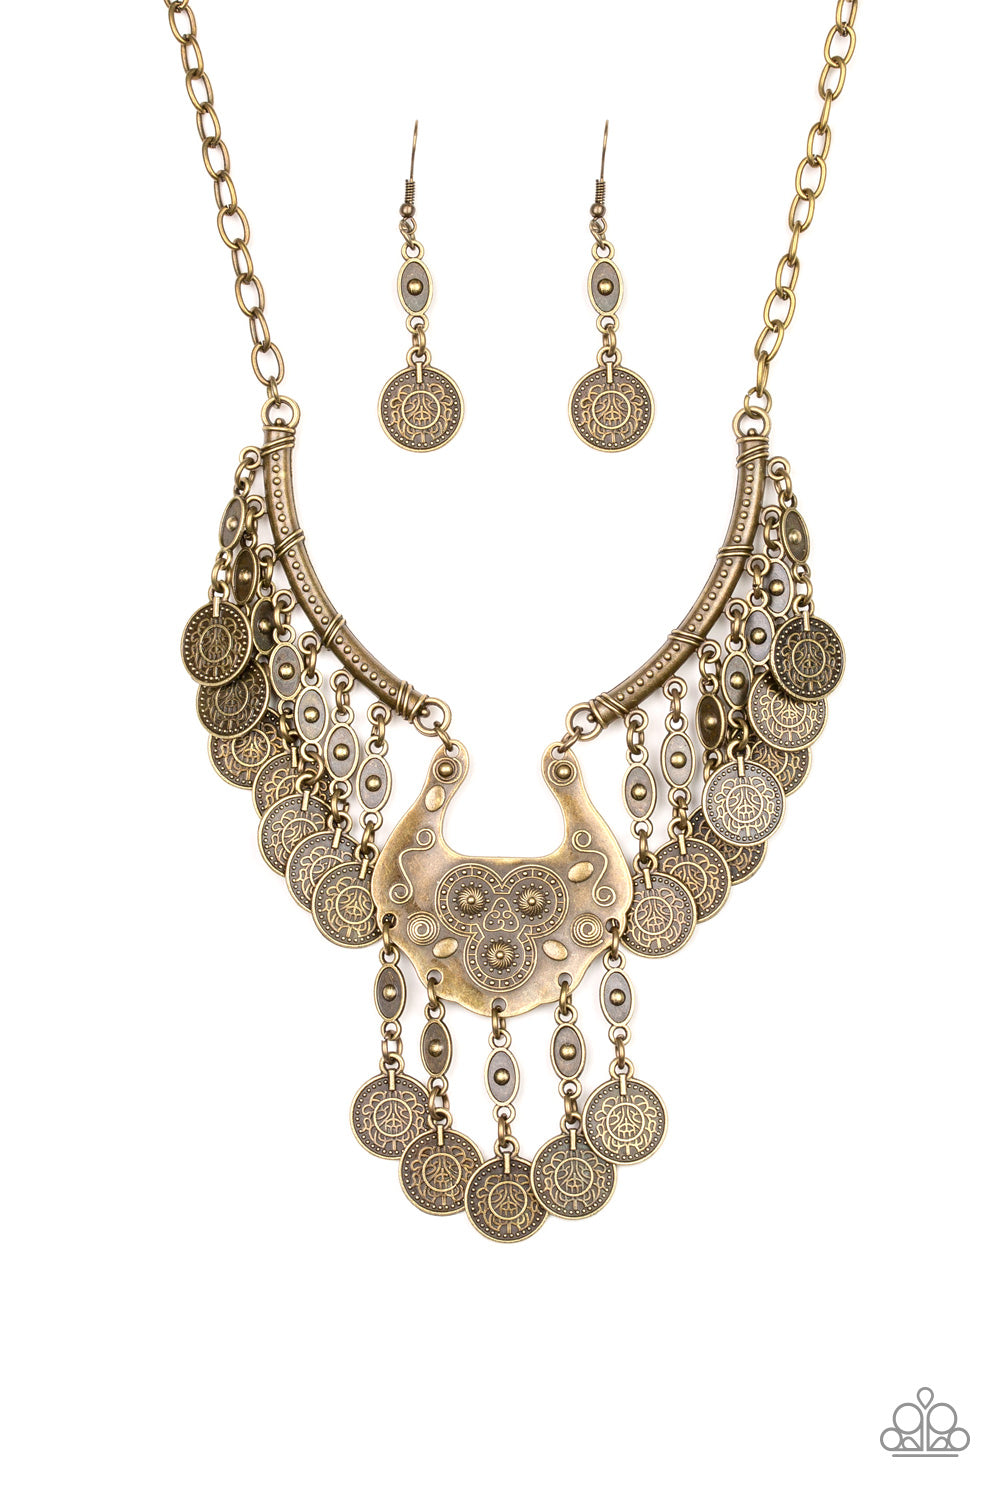 Treasure Temptress Brass Paparazzi Necklaces Cashmere Pink Jewels - Cashmere Pink Jewels & Accessories, Cashmere Pink Jewels & Accessories - Paparazzi